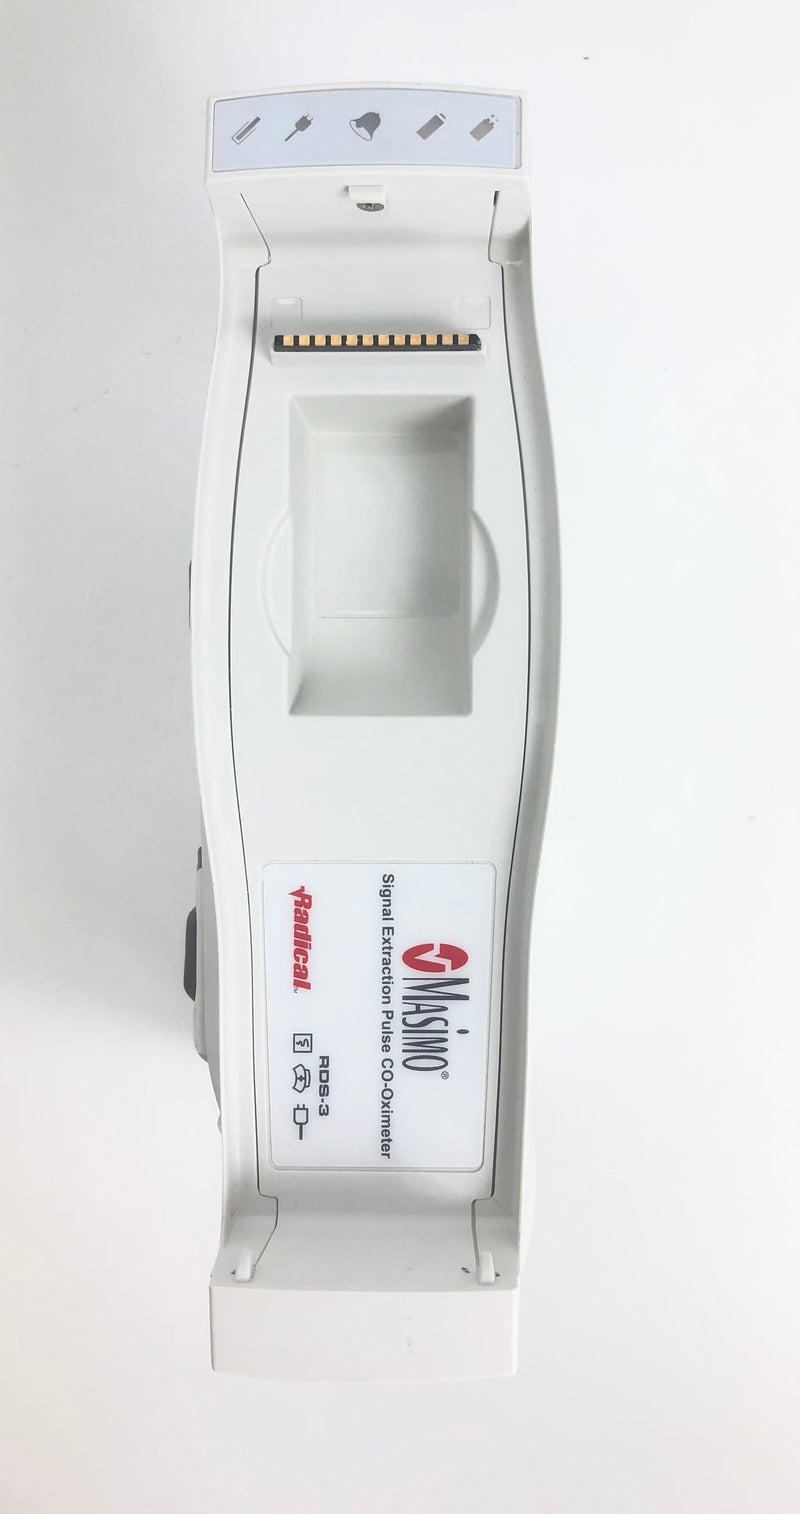 Radical 7 Masimo Pulse CO-Oximeter [Refurbished]